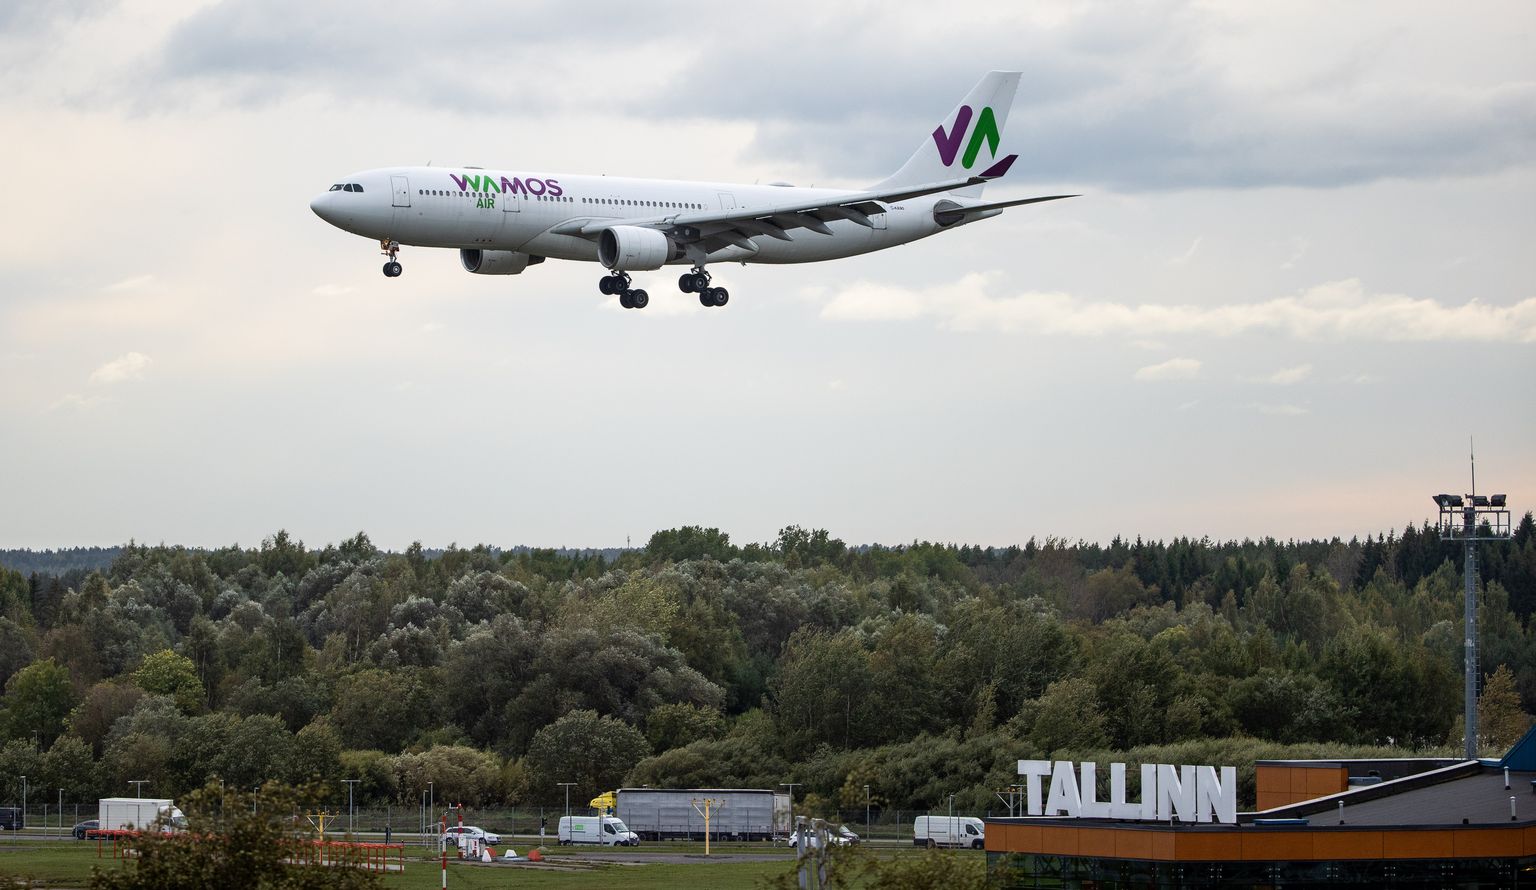 Lennuk Tallinna lennujaamas